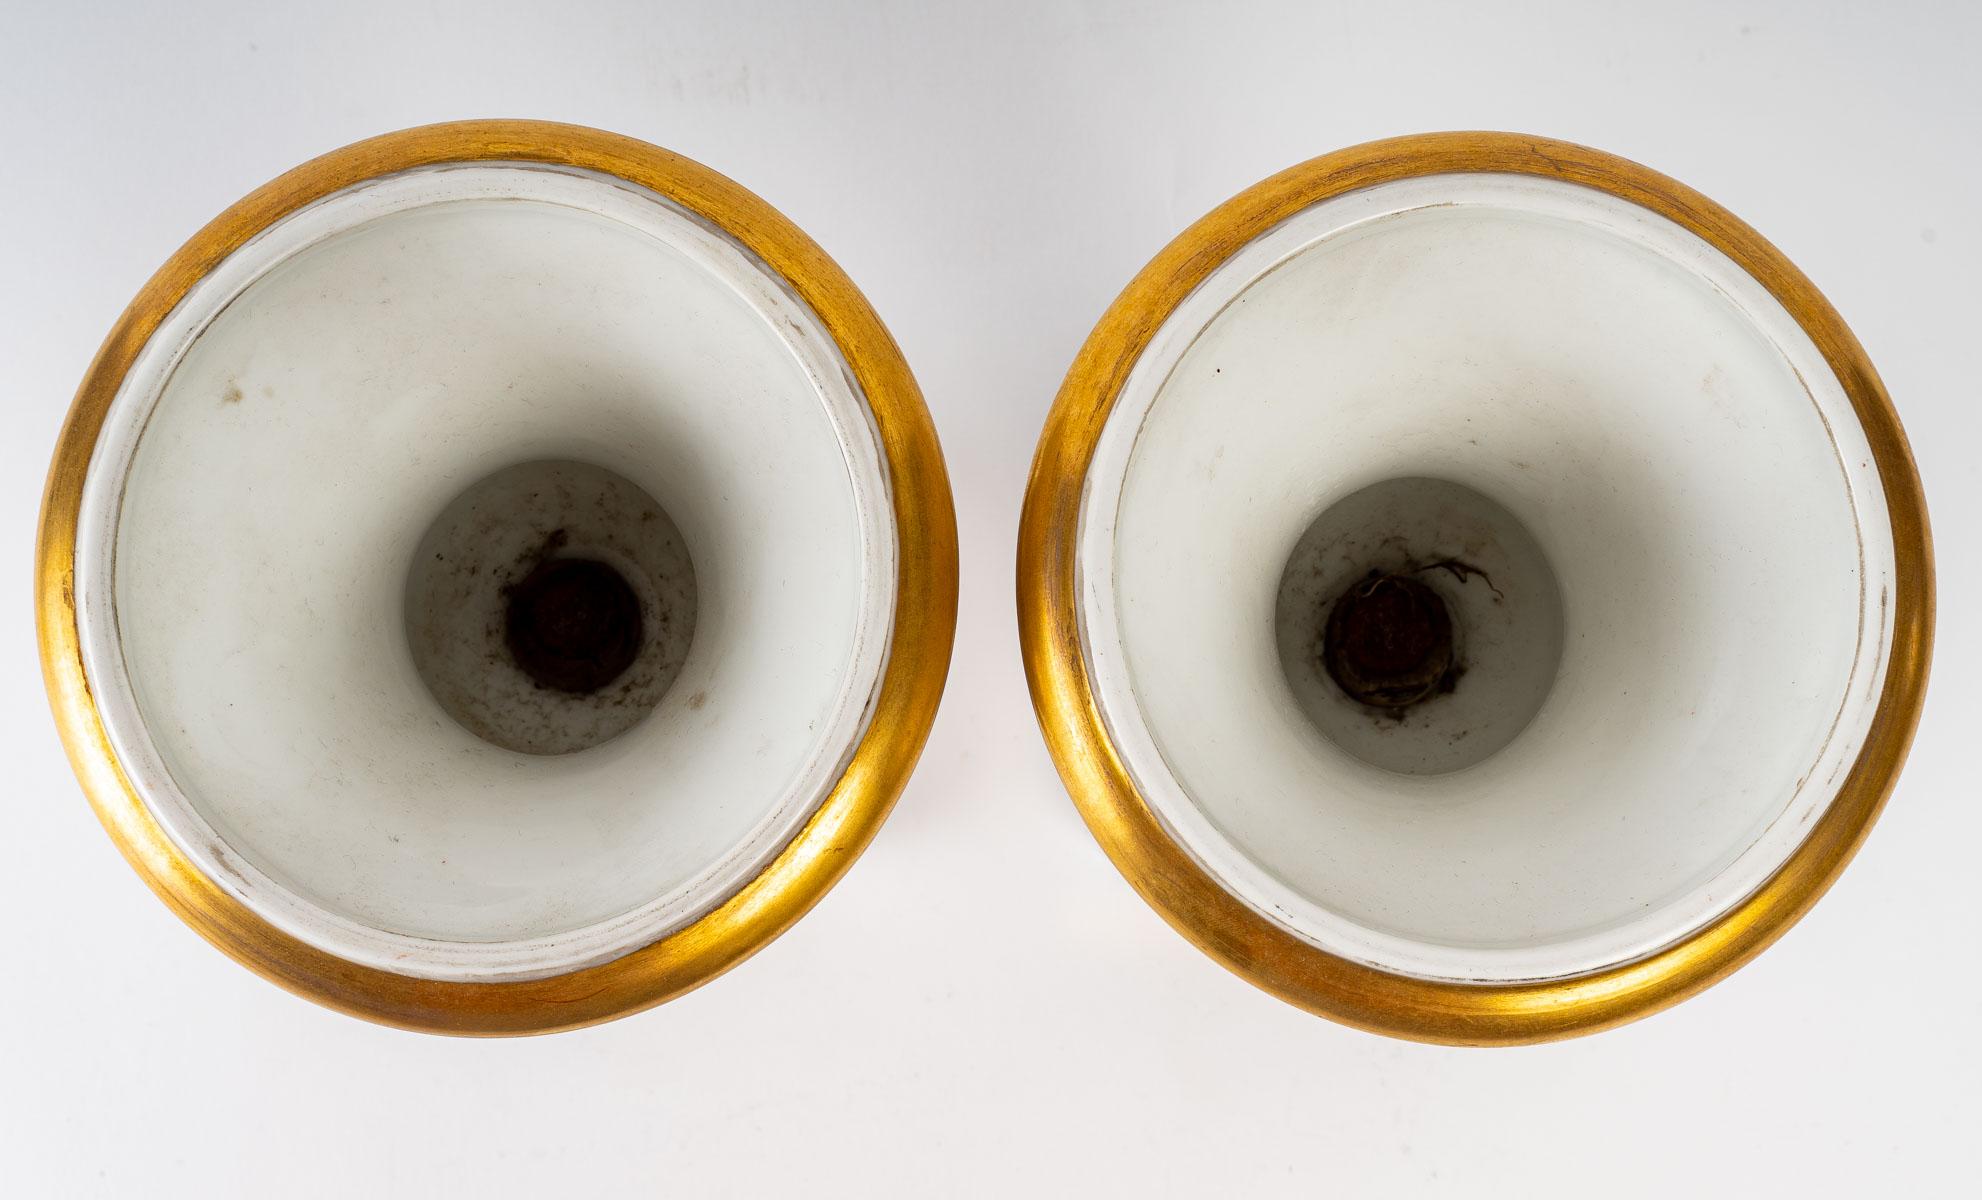 A pair of small Medicis vases, late 19th century, Napoleon III period.
Measures: H: 21 cm, D: 14.5 cm.